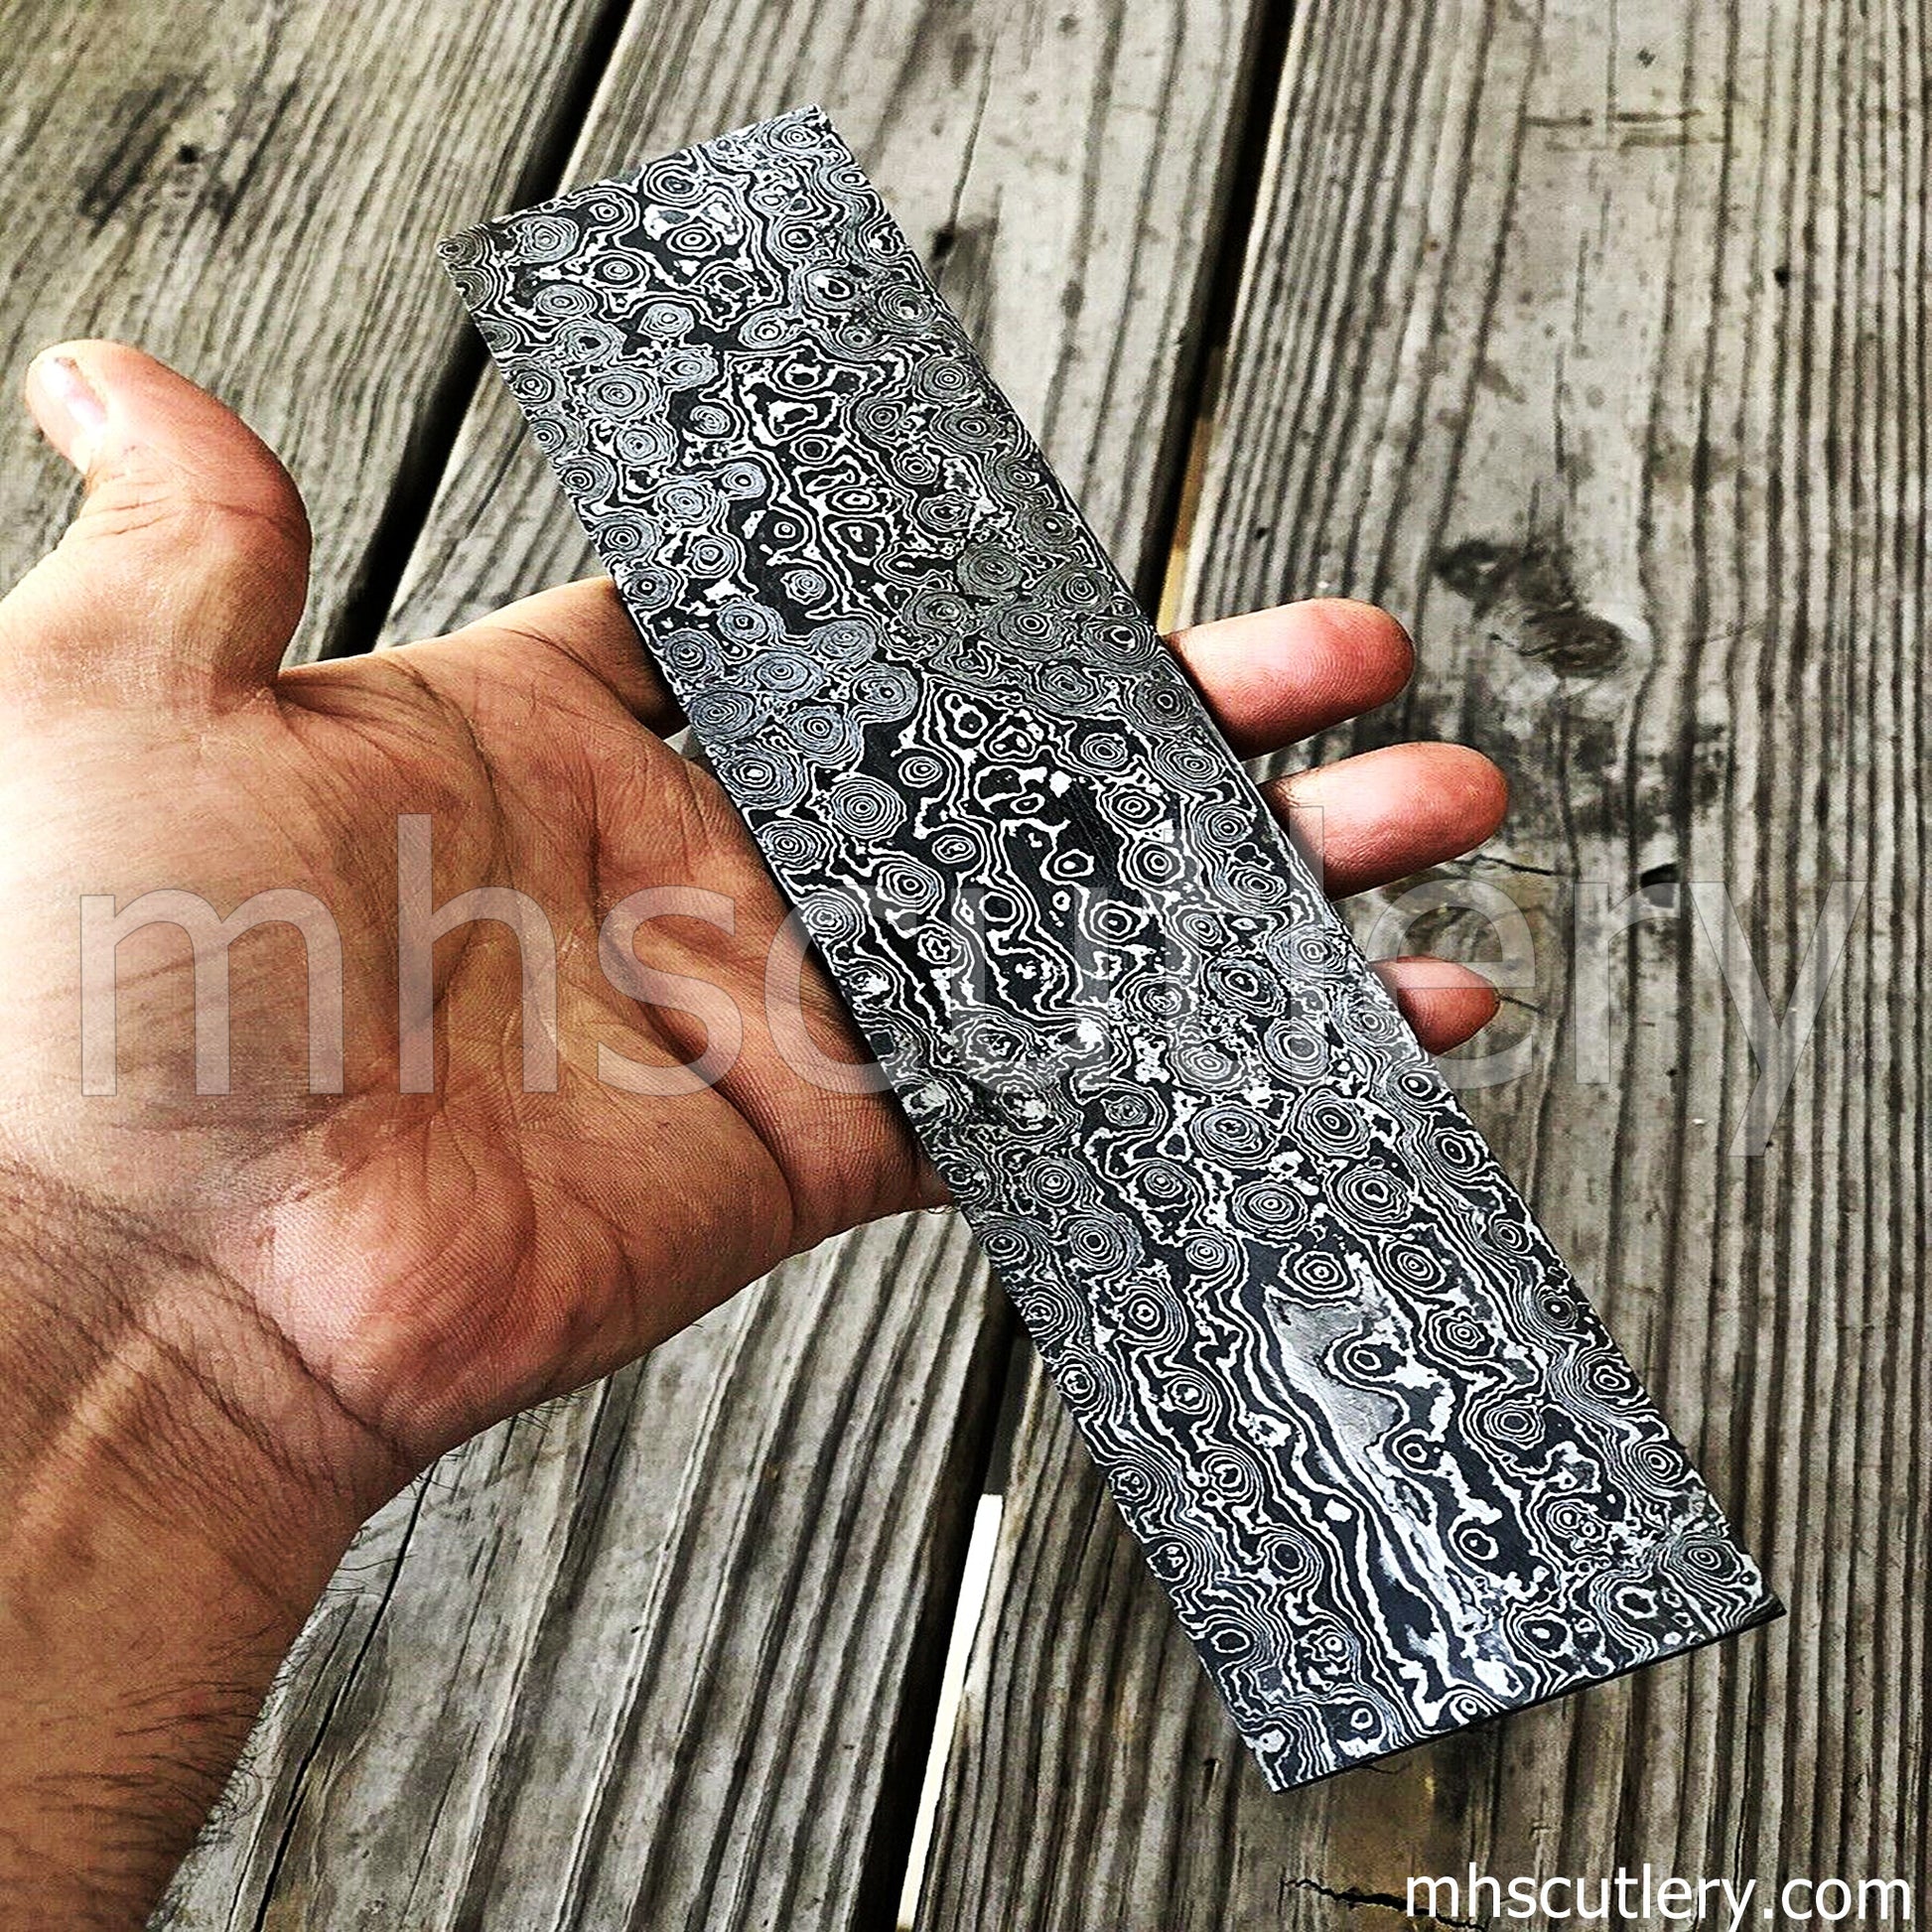 Damascus Steel Raindrop Pattern Billet For Knife Makers | mhscutlery